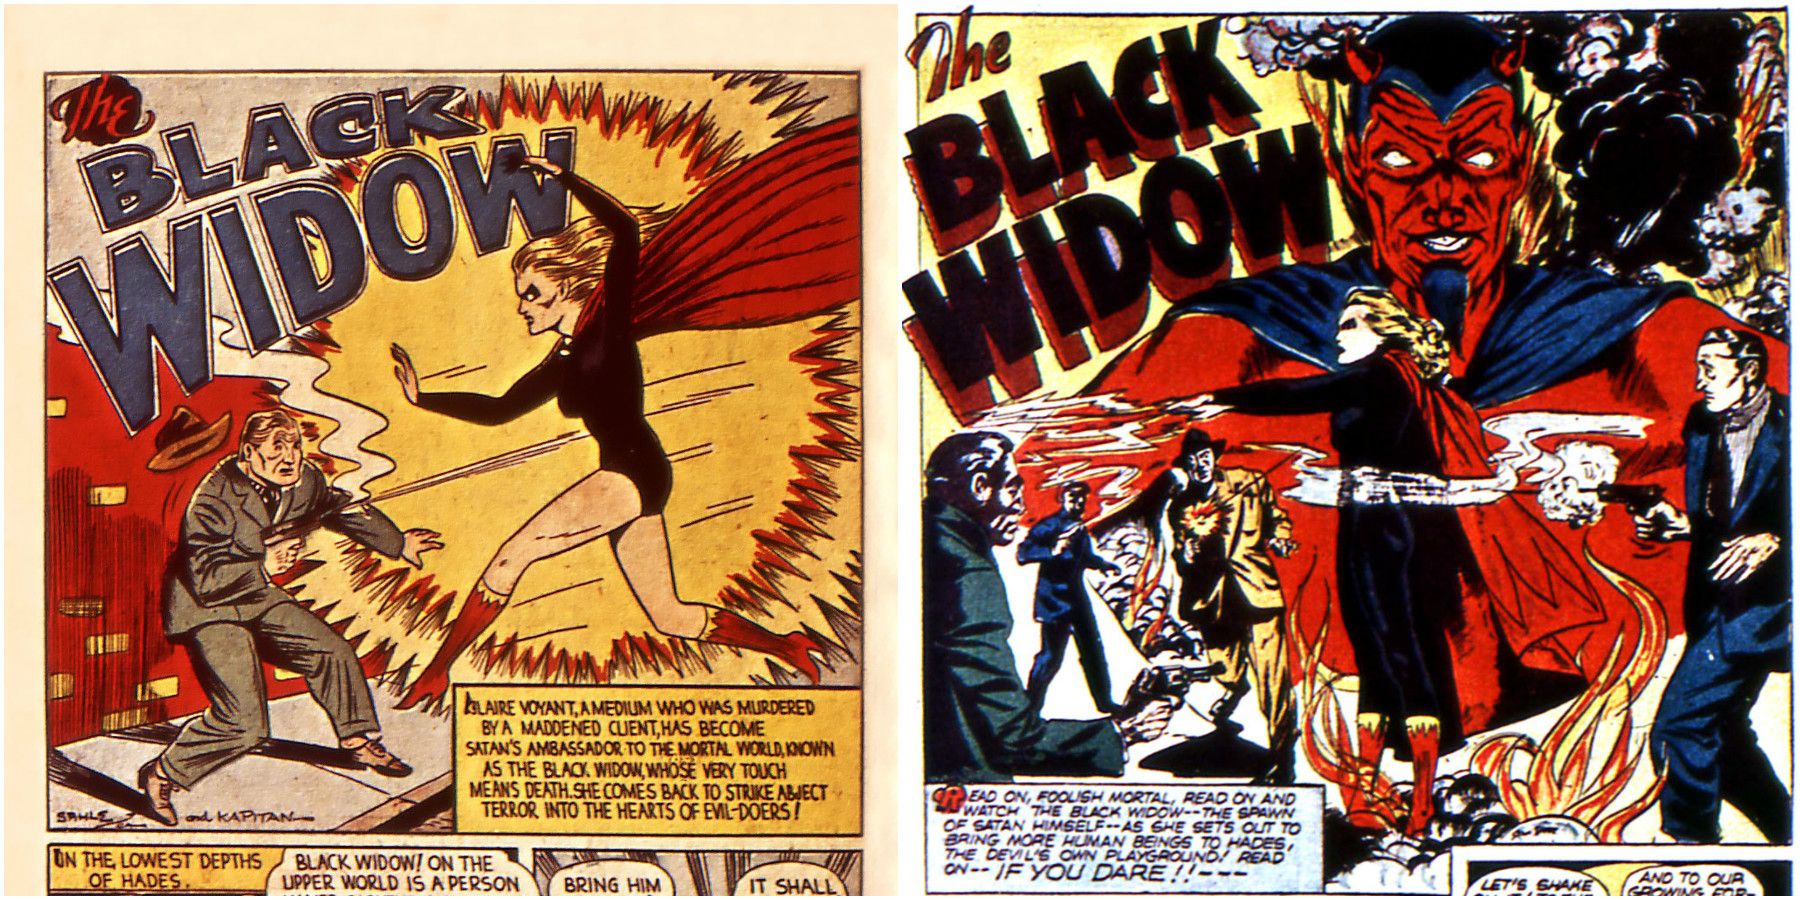 The Original Black Widow